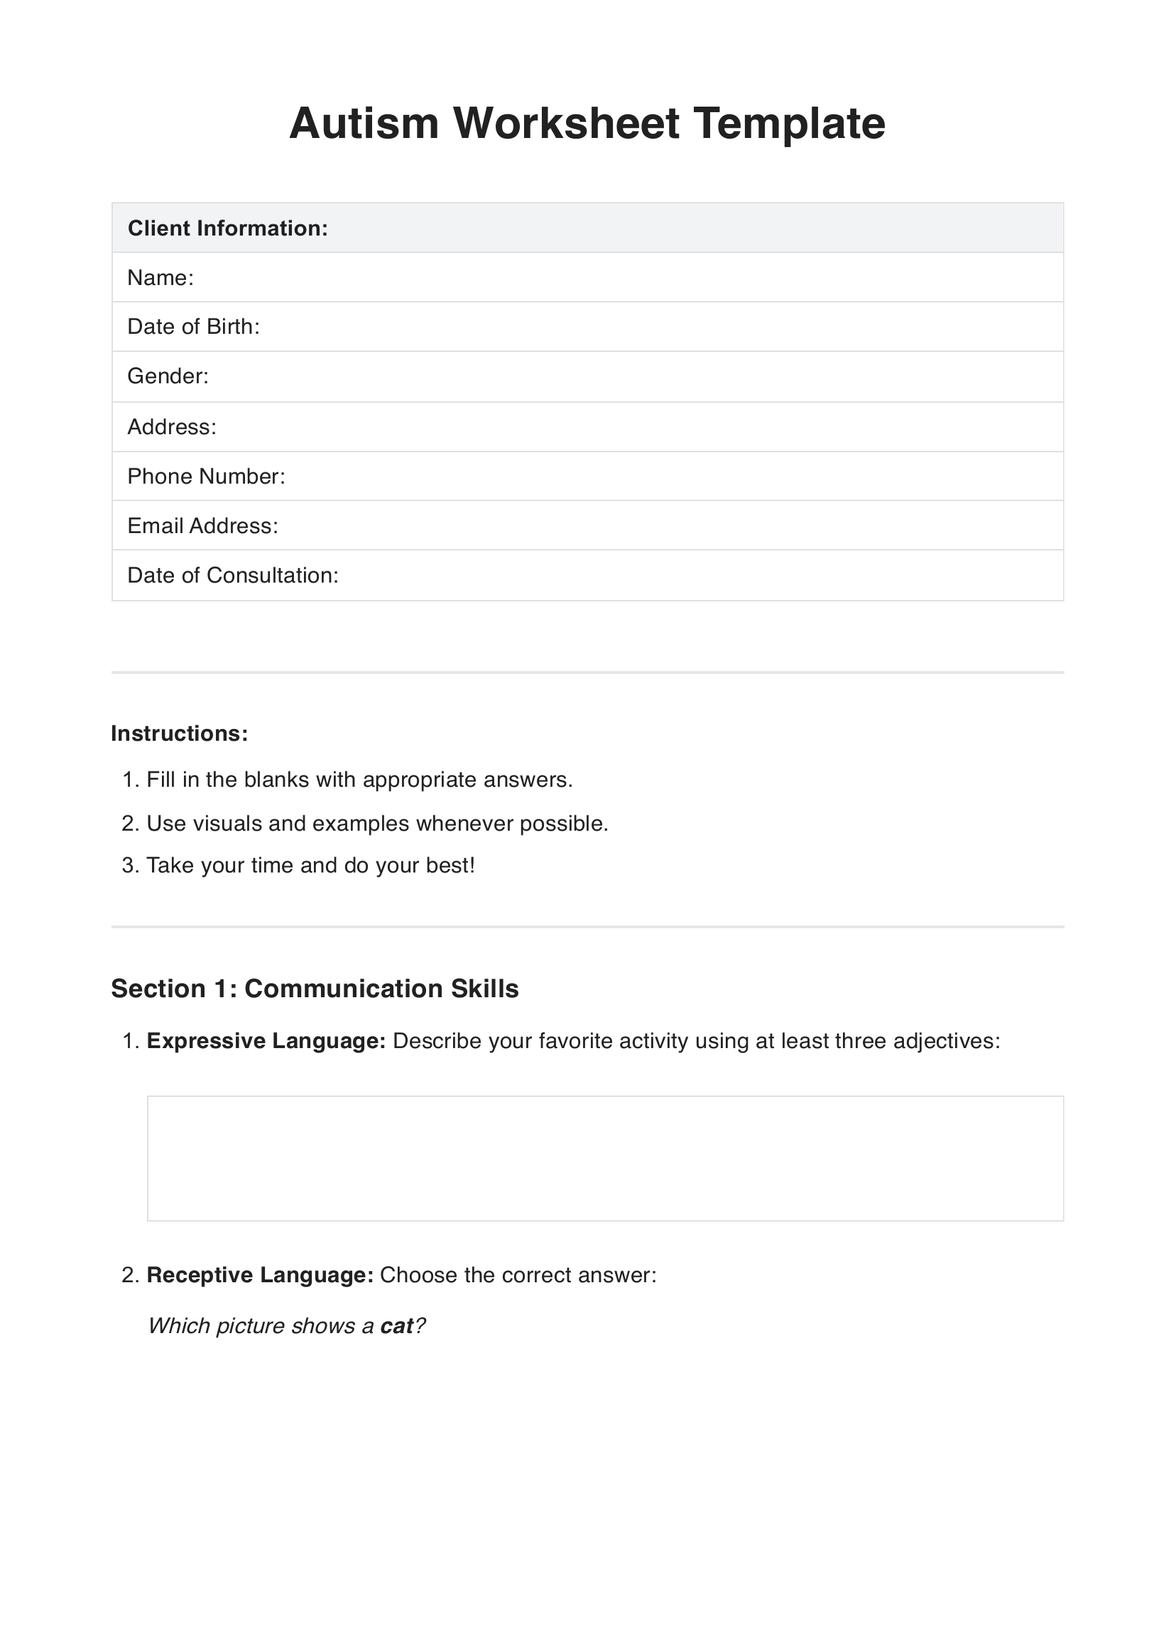 Autism Worksheets PDF Example